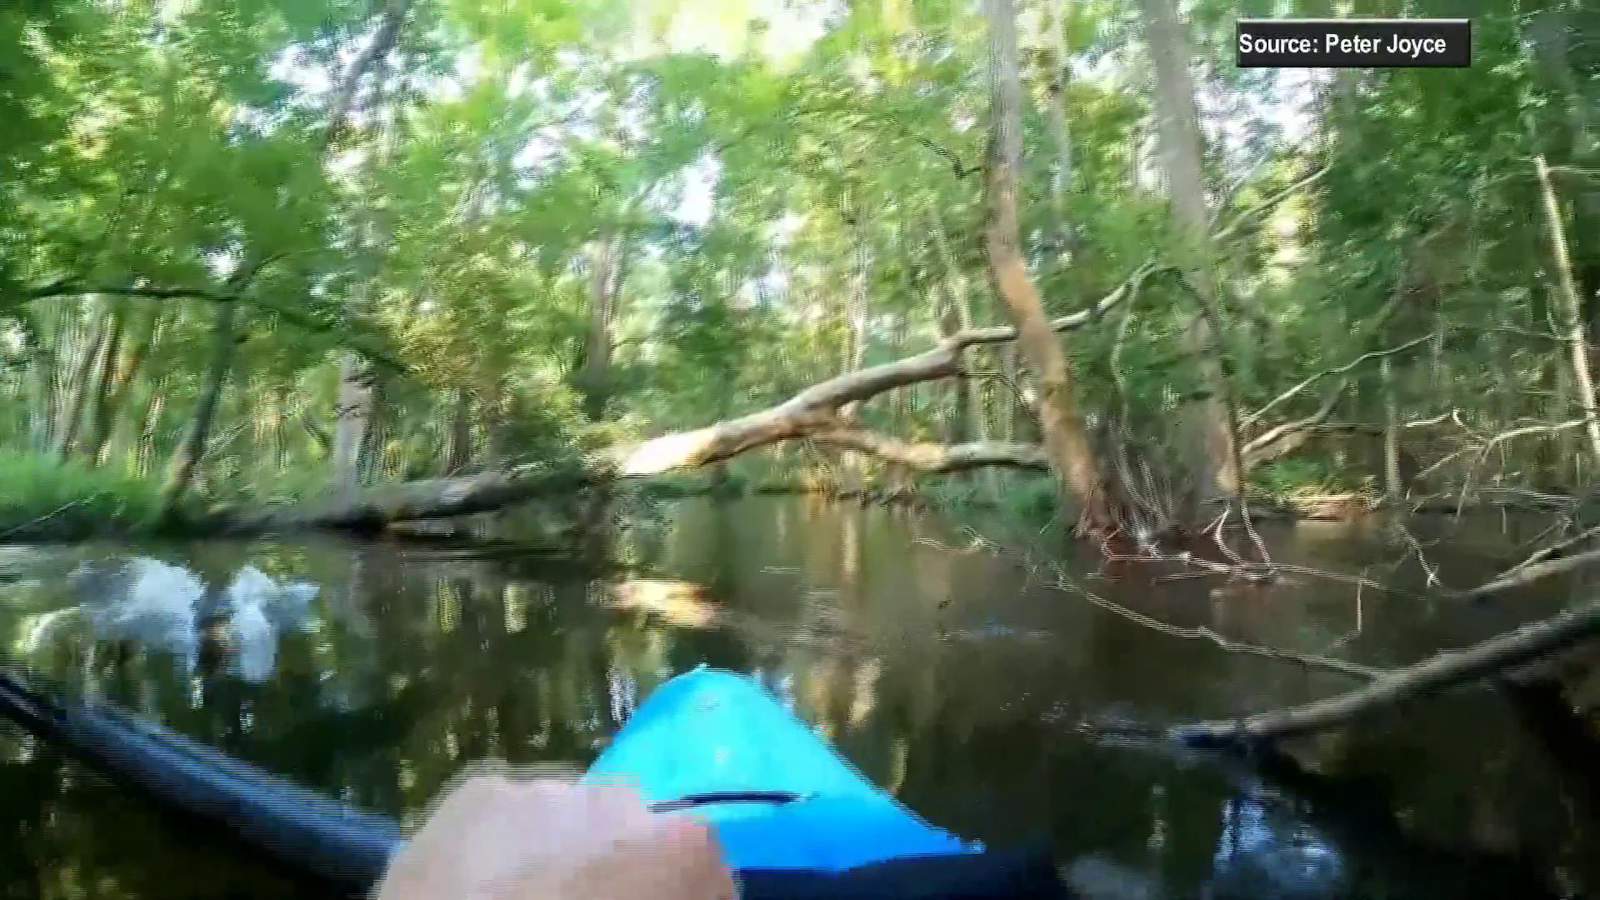 WATCH: Alligator attacks kayaker in North Carolina river